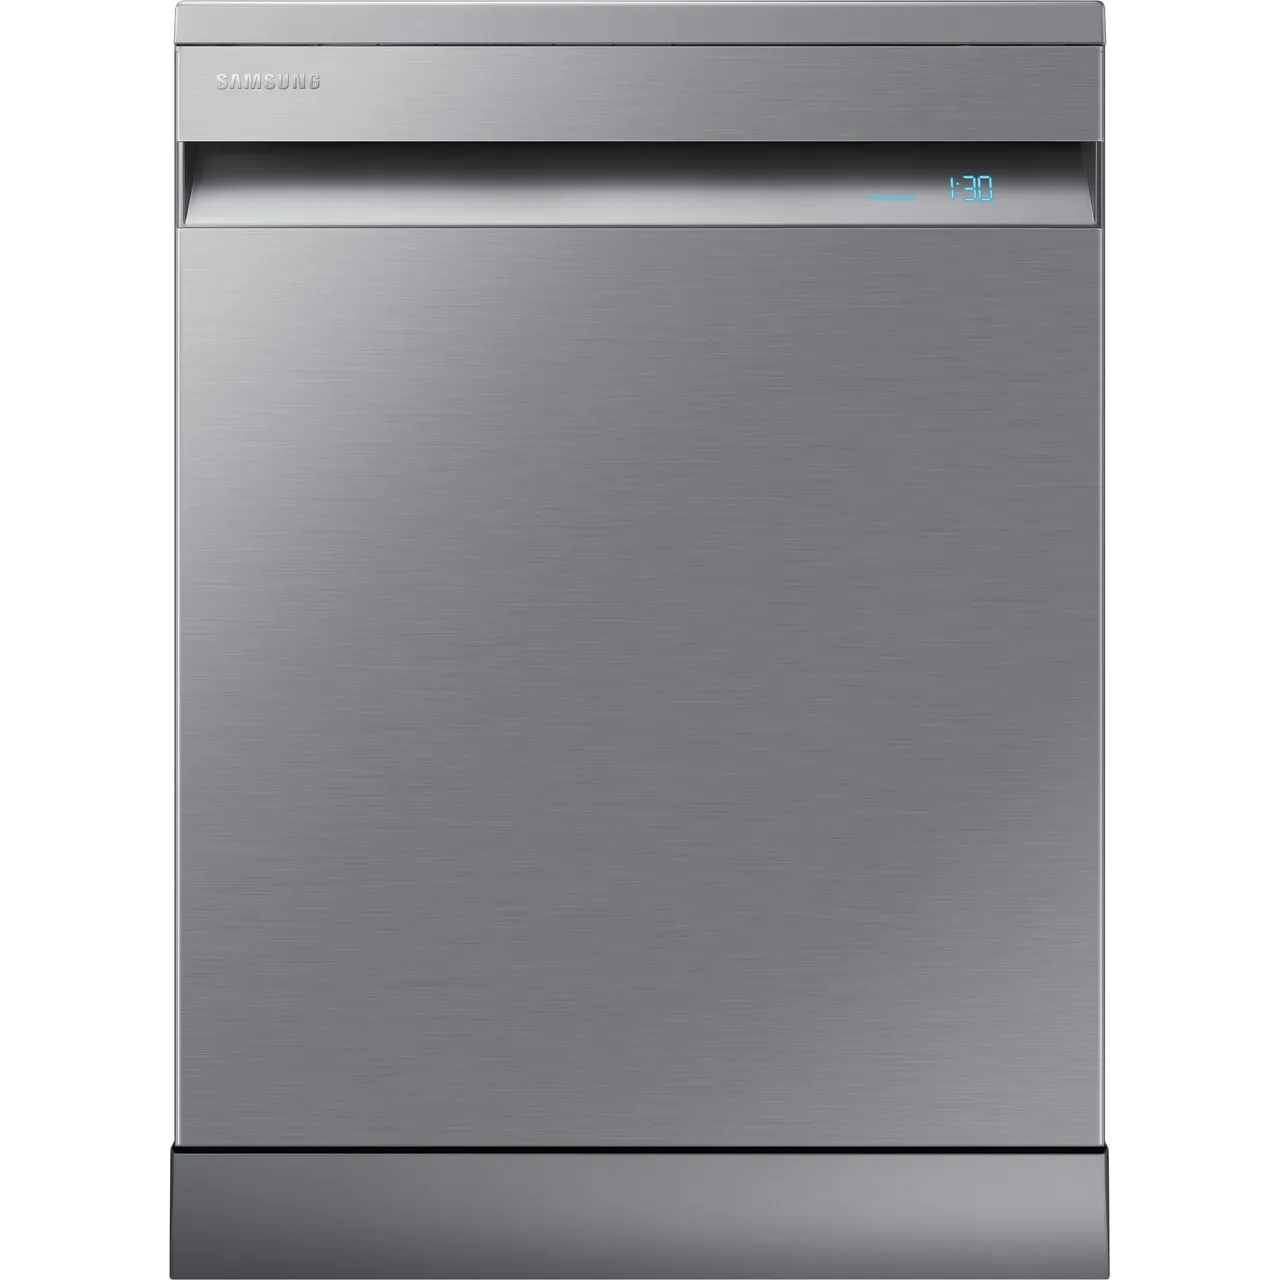 Samsung DW60A8060FS Freestanding Dishwasher 60cm Stainless Steel GRADE A